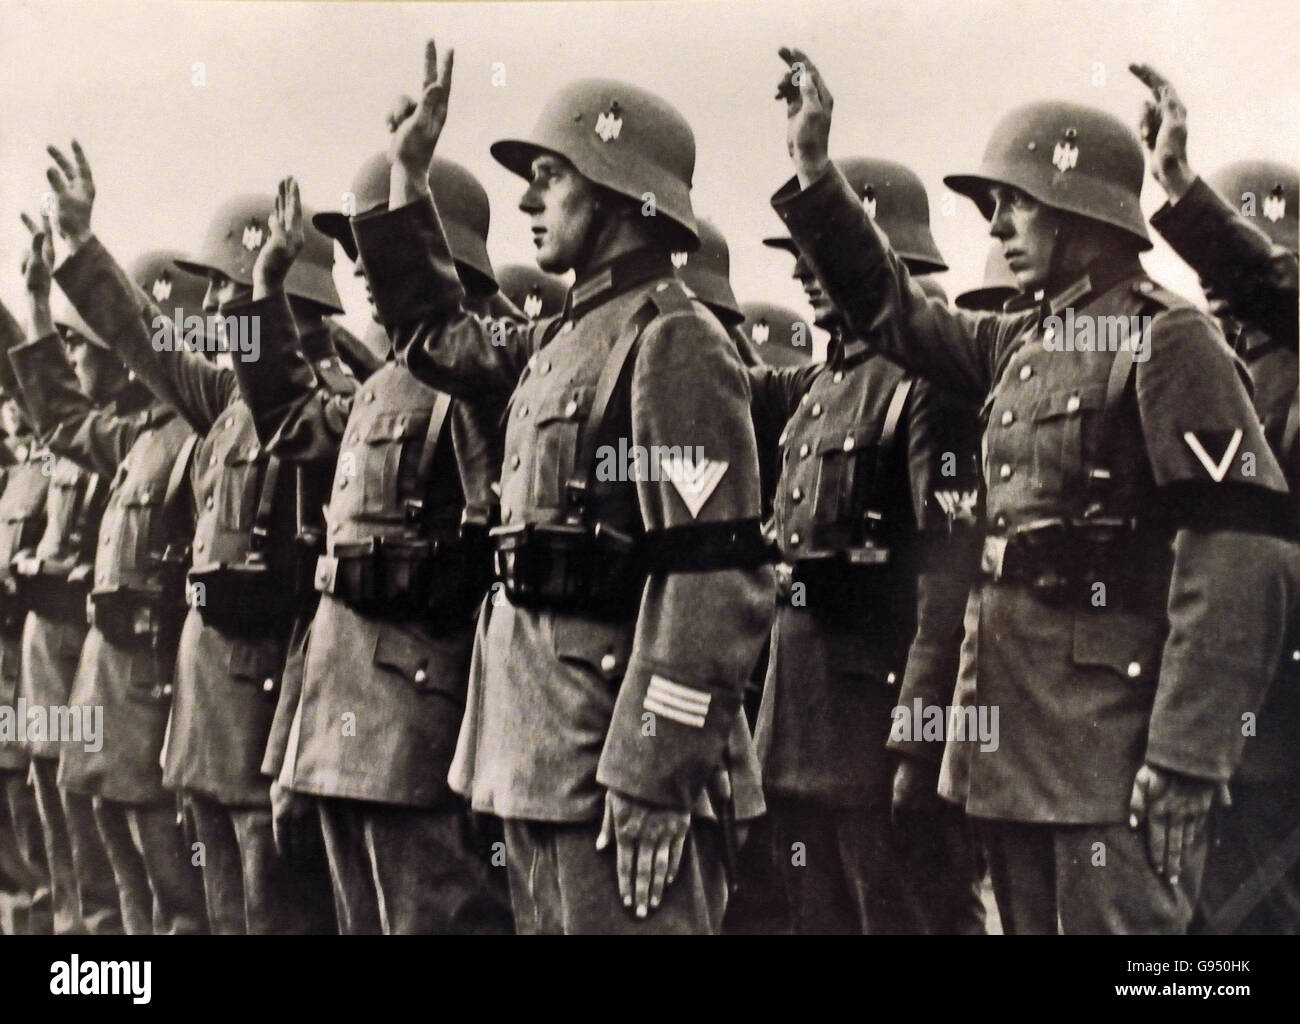 Nazi German General In World War Ii Banque d'image et photos - Alamy